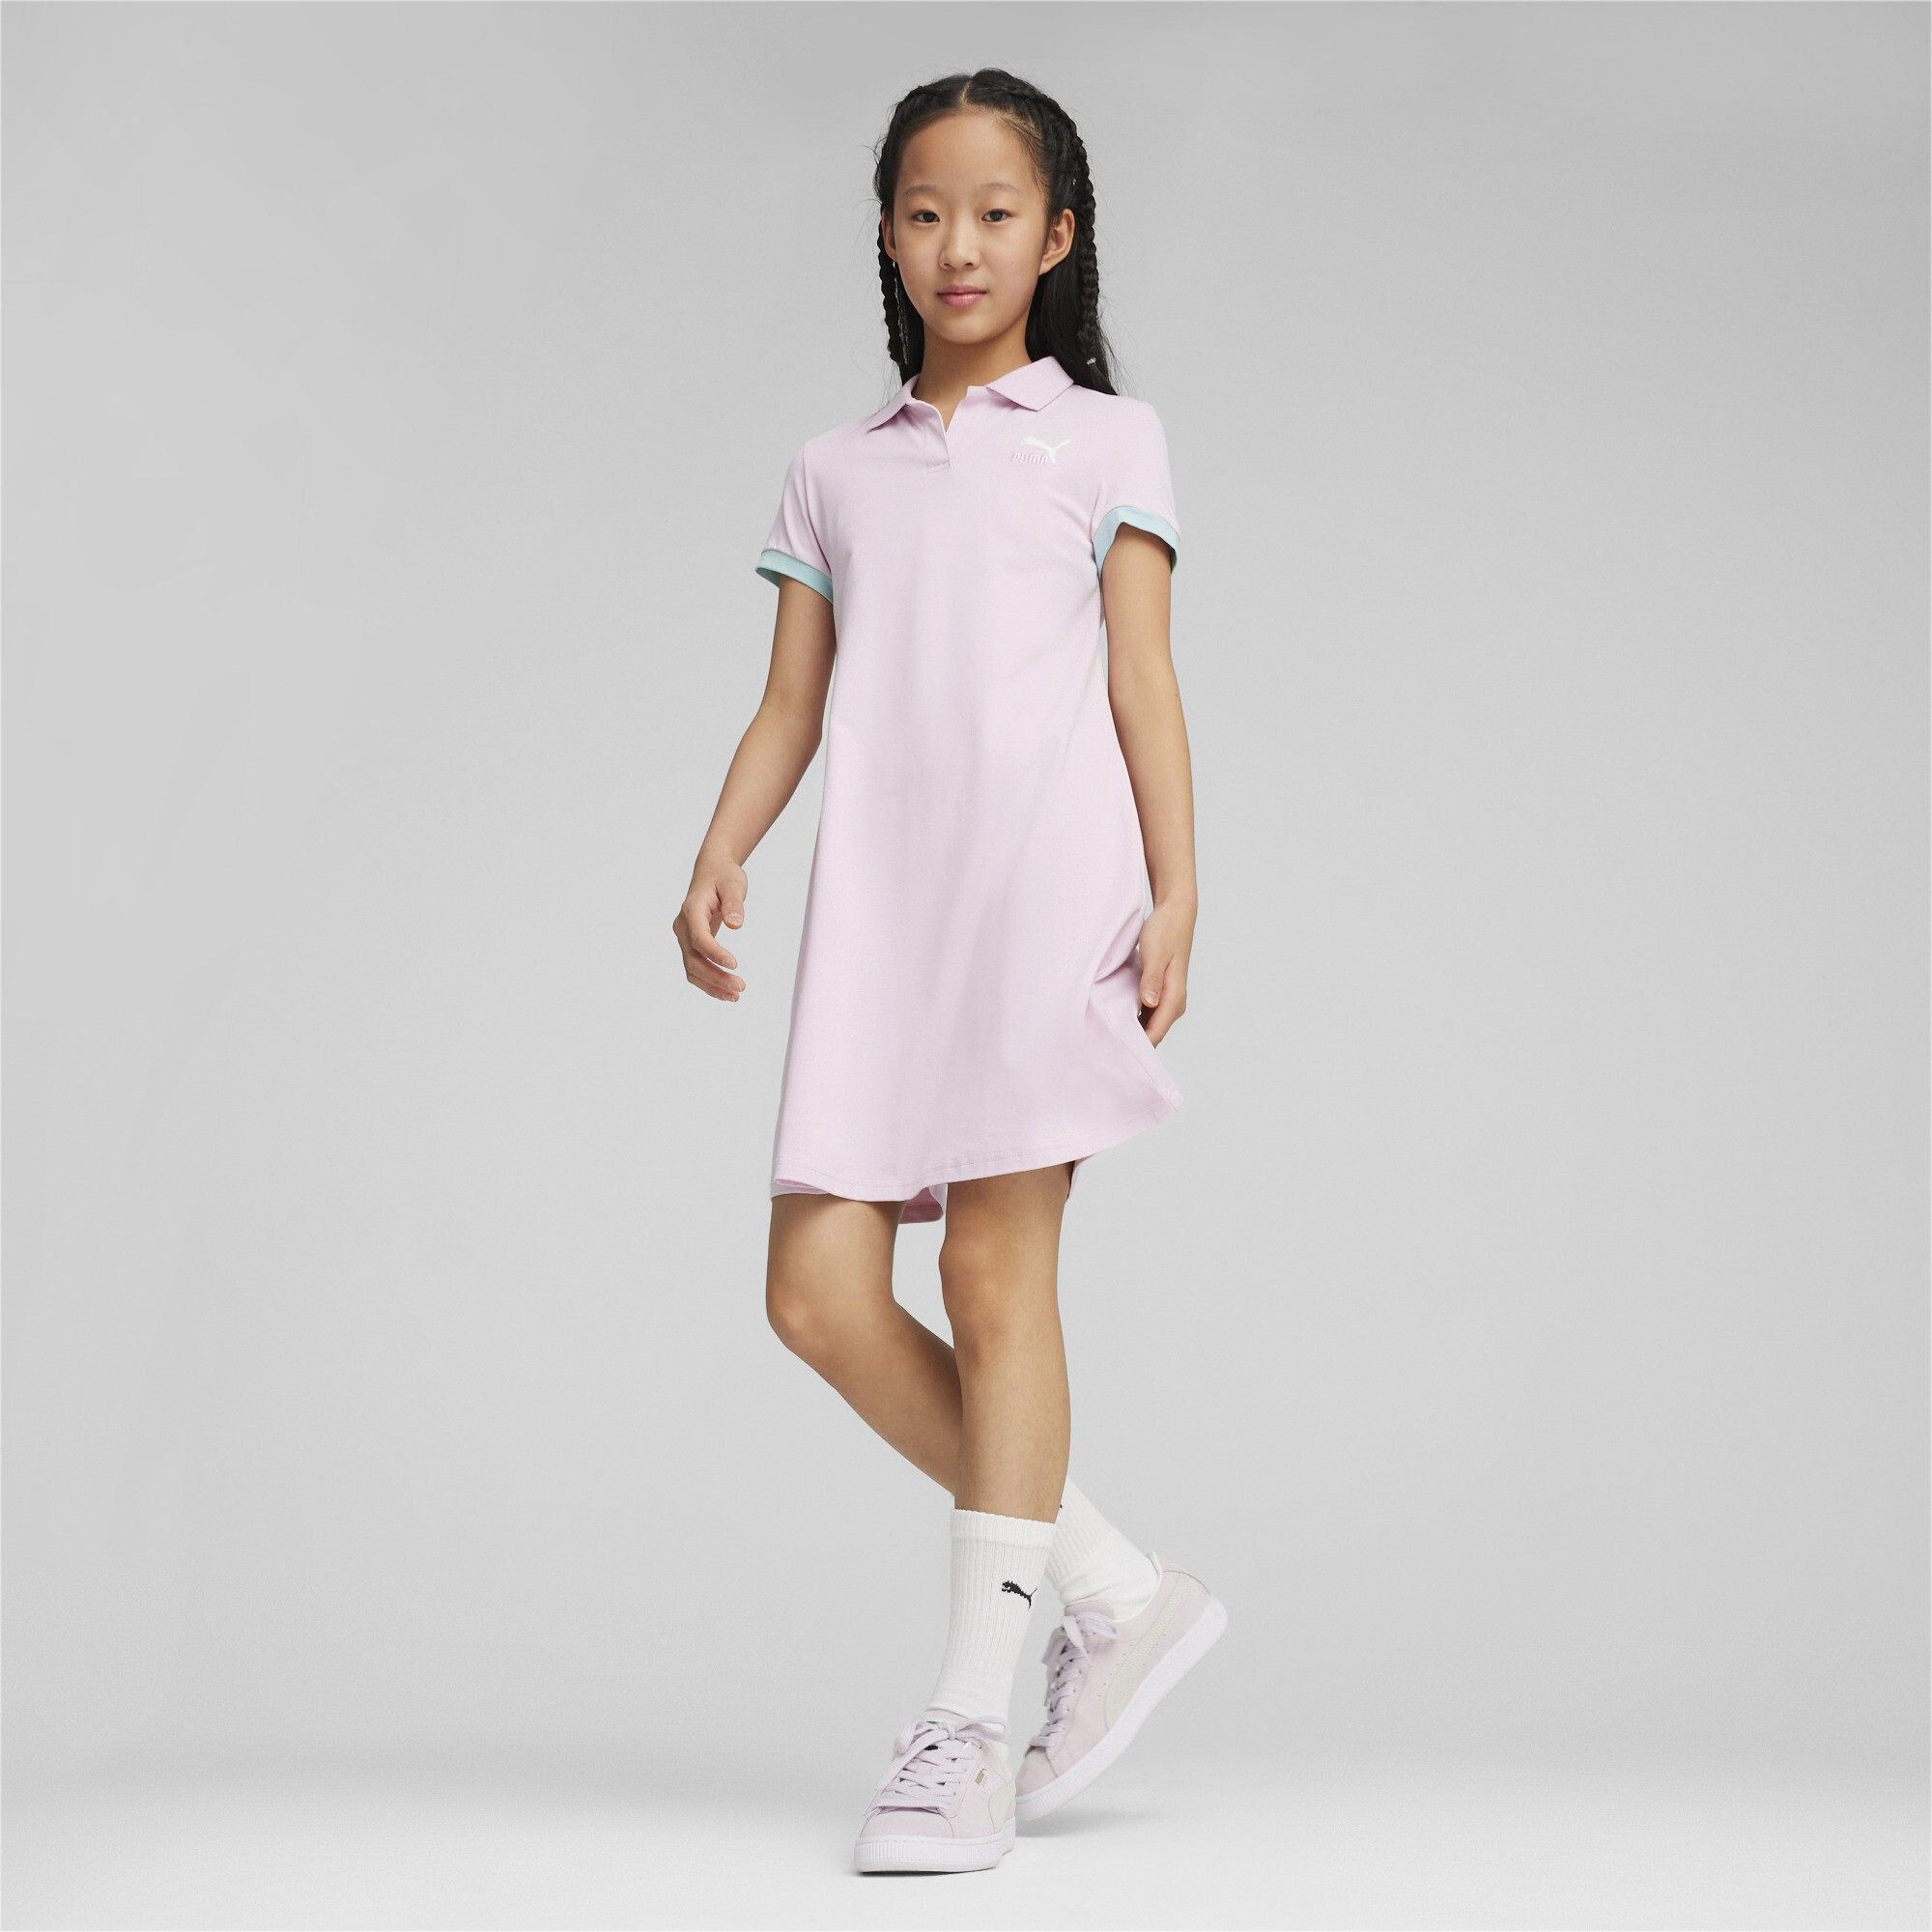 PUMA CLASSICS Match Point Dress In 90 - Purple, Size 13-14 Youth